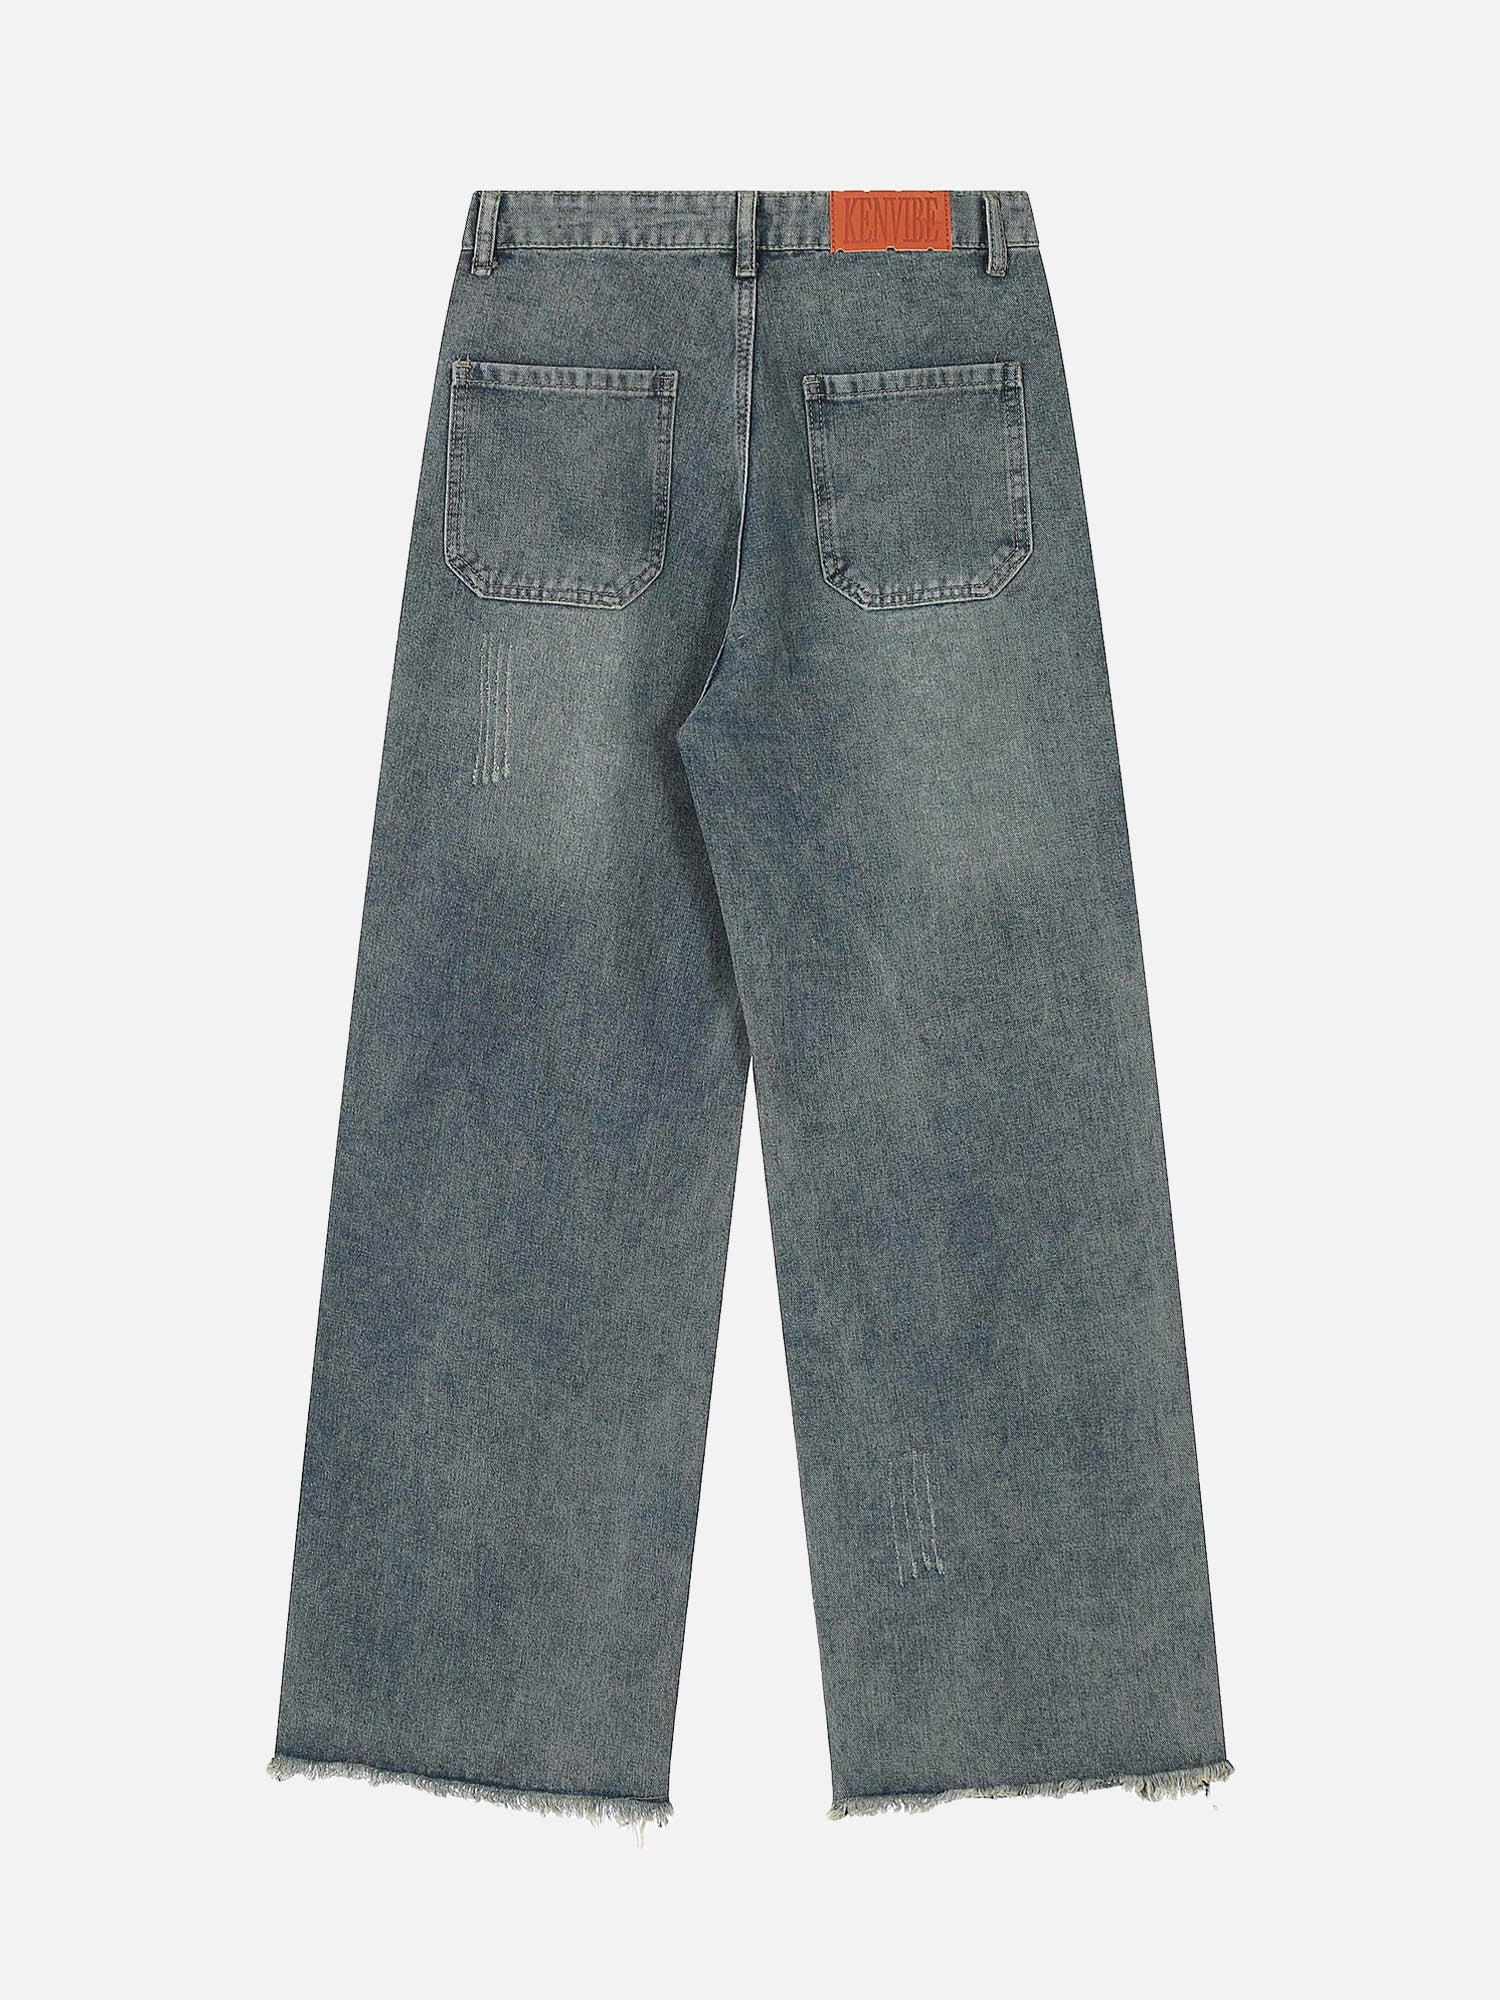 Street Star Print Distressed Shaggy Jeans